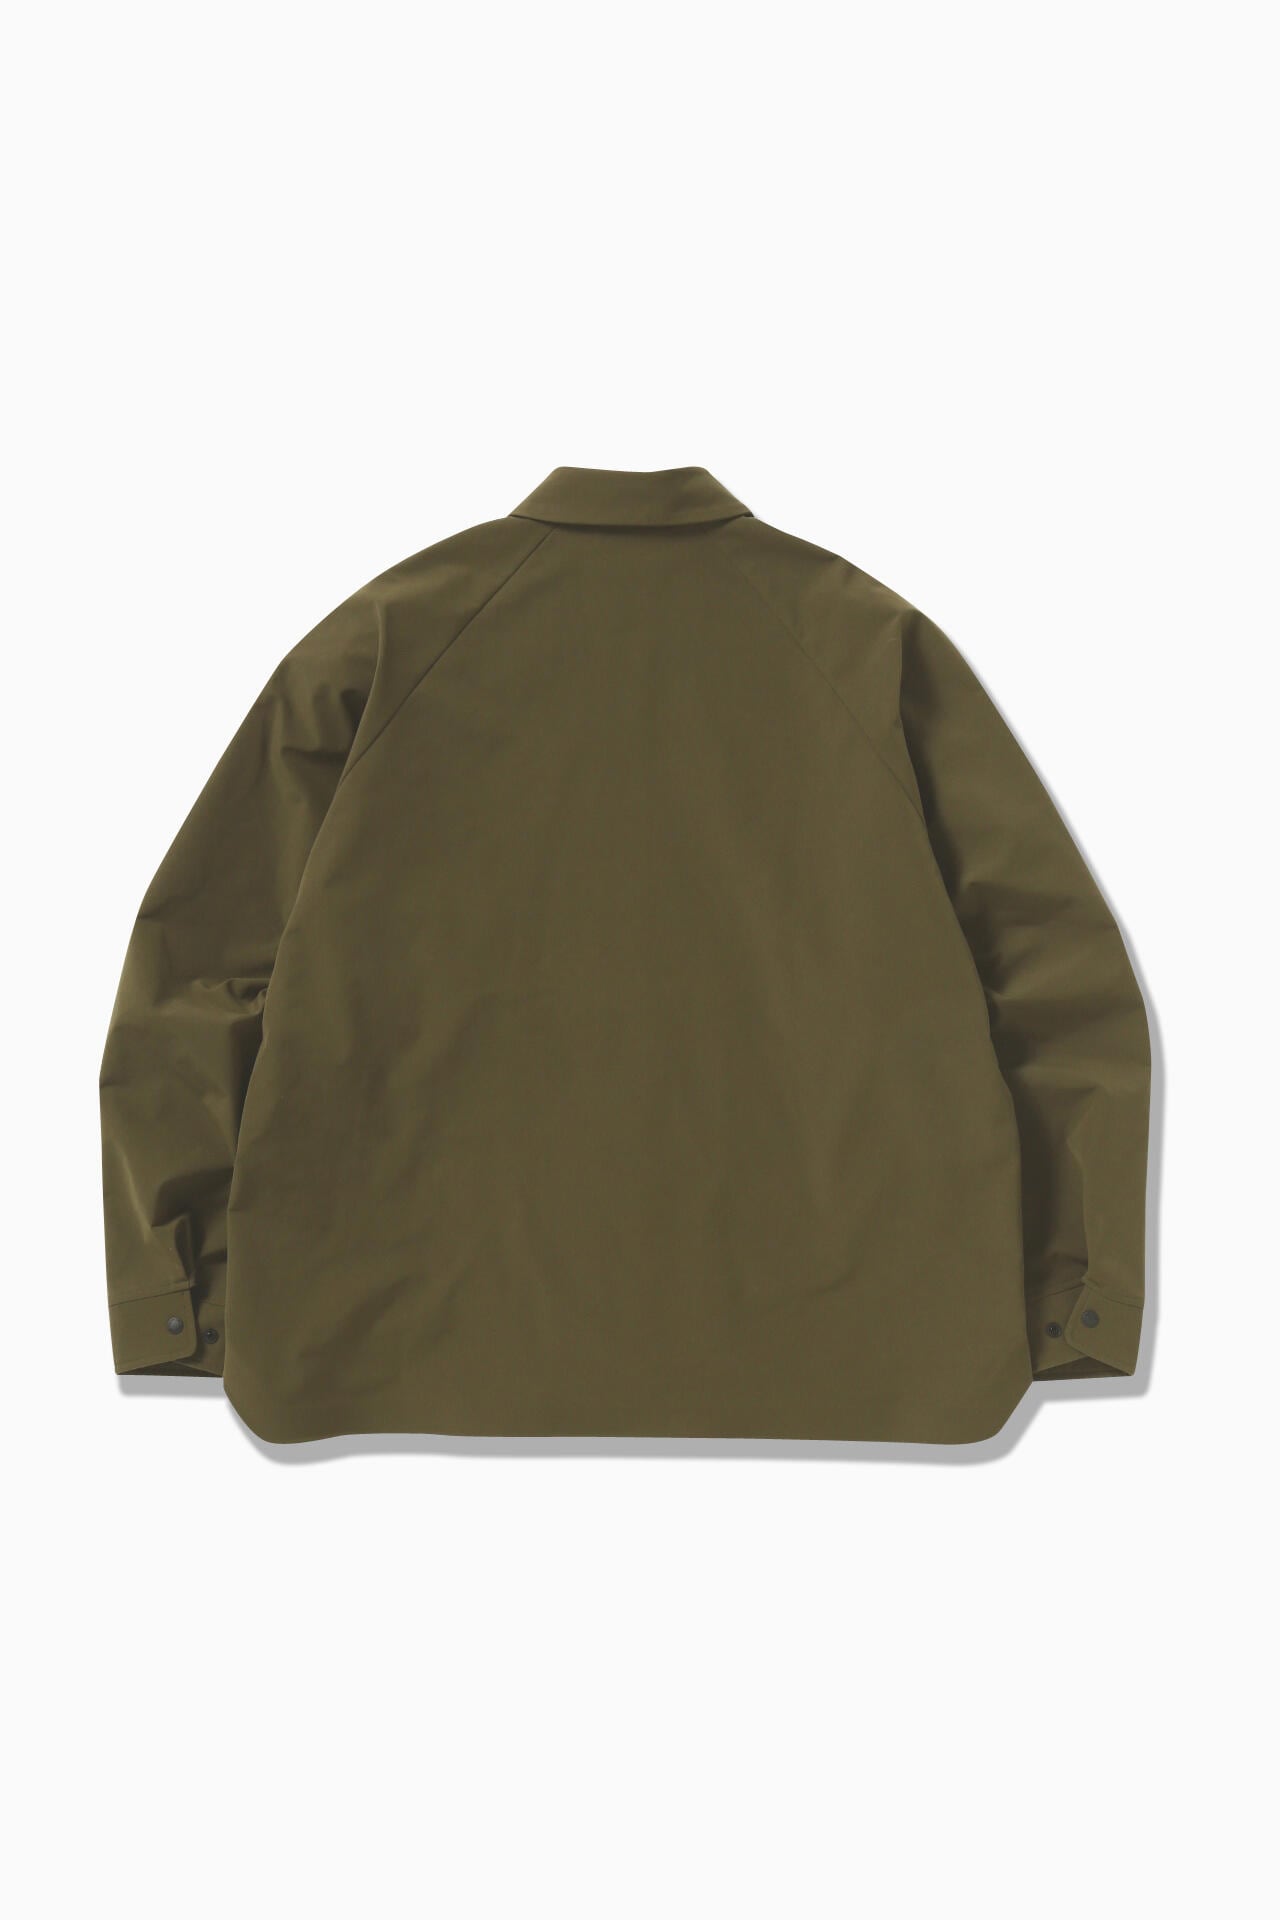 PE matte cloth jacket